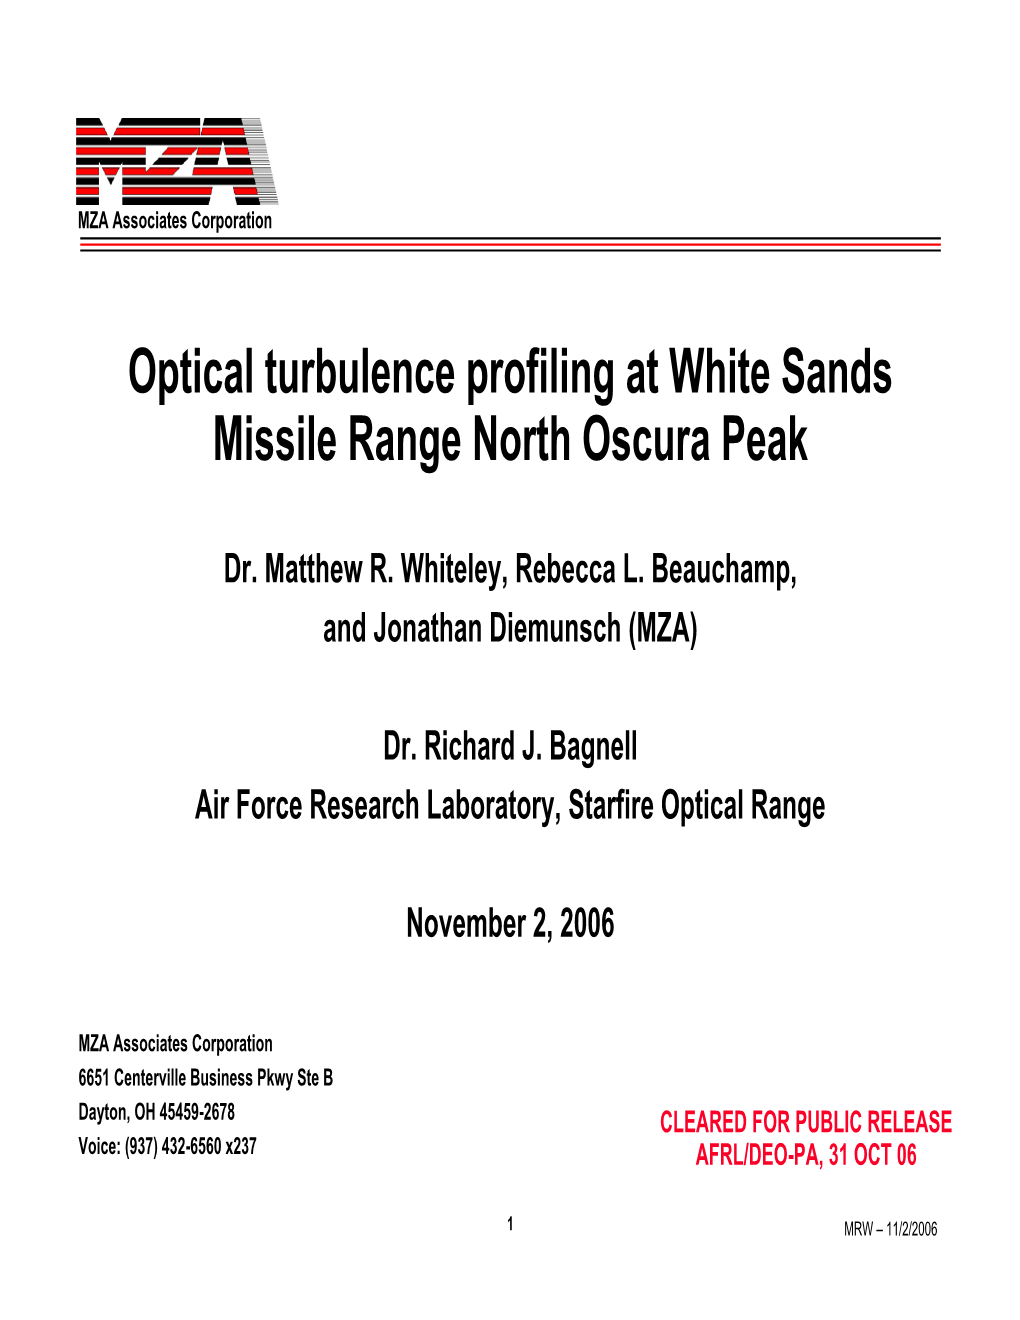 Optical Turbulence Profiling at White Sands Missile Range North Oscura Peak